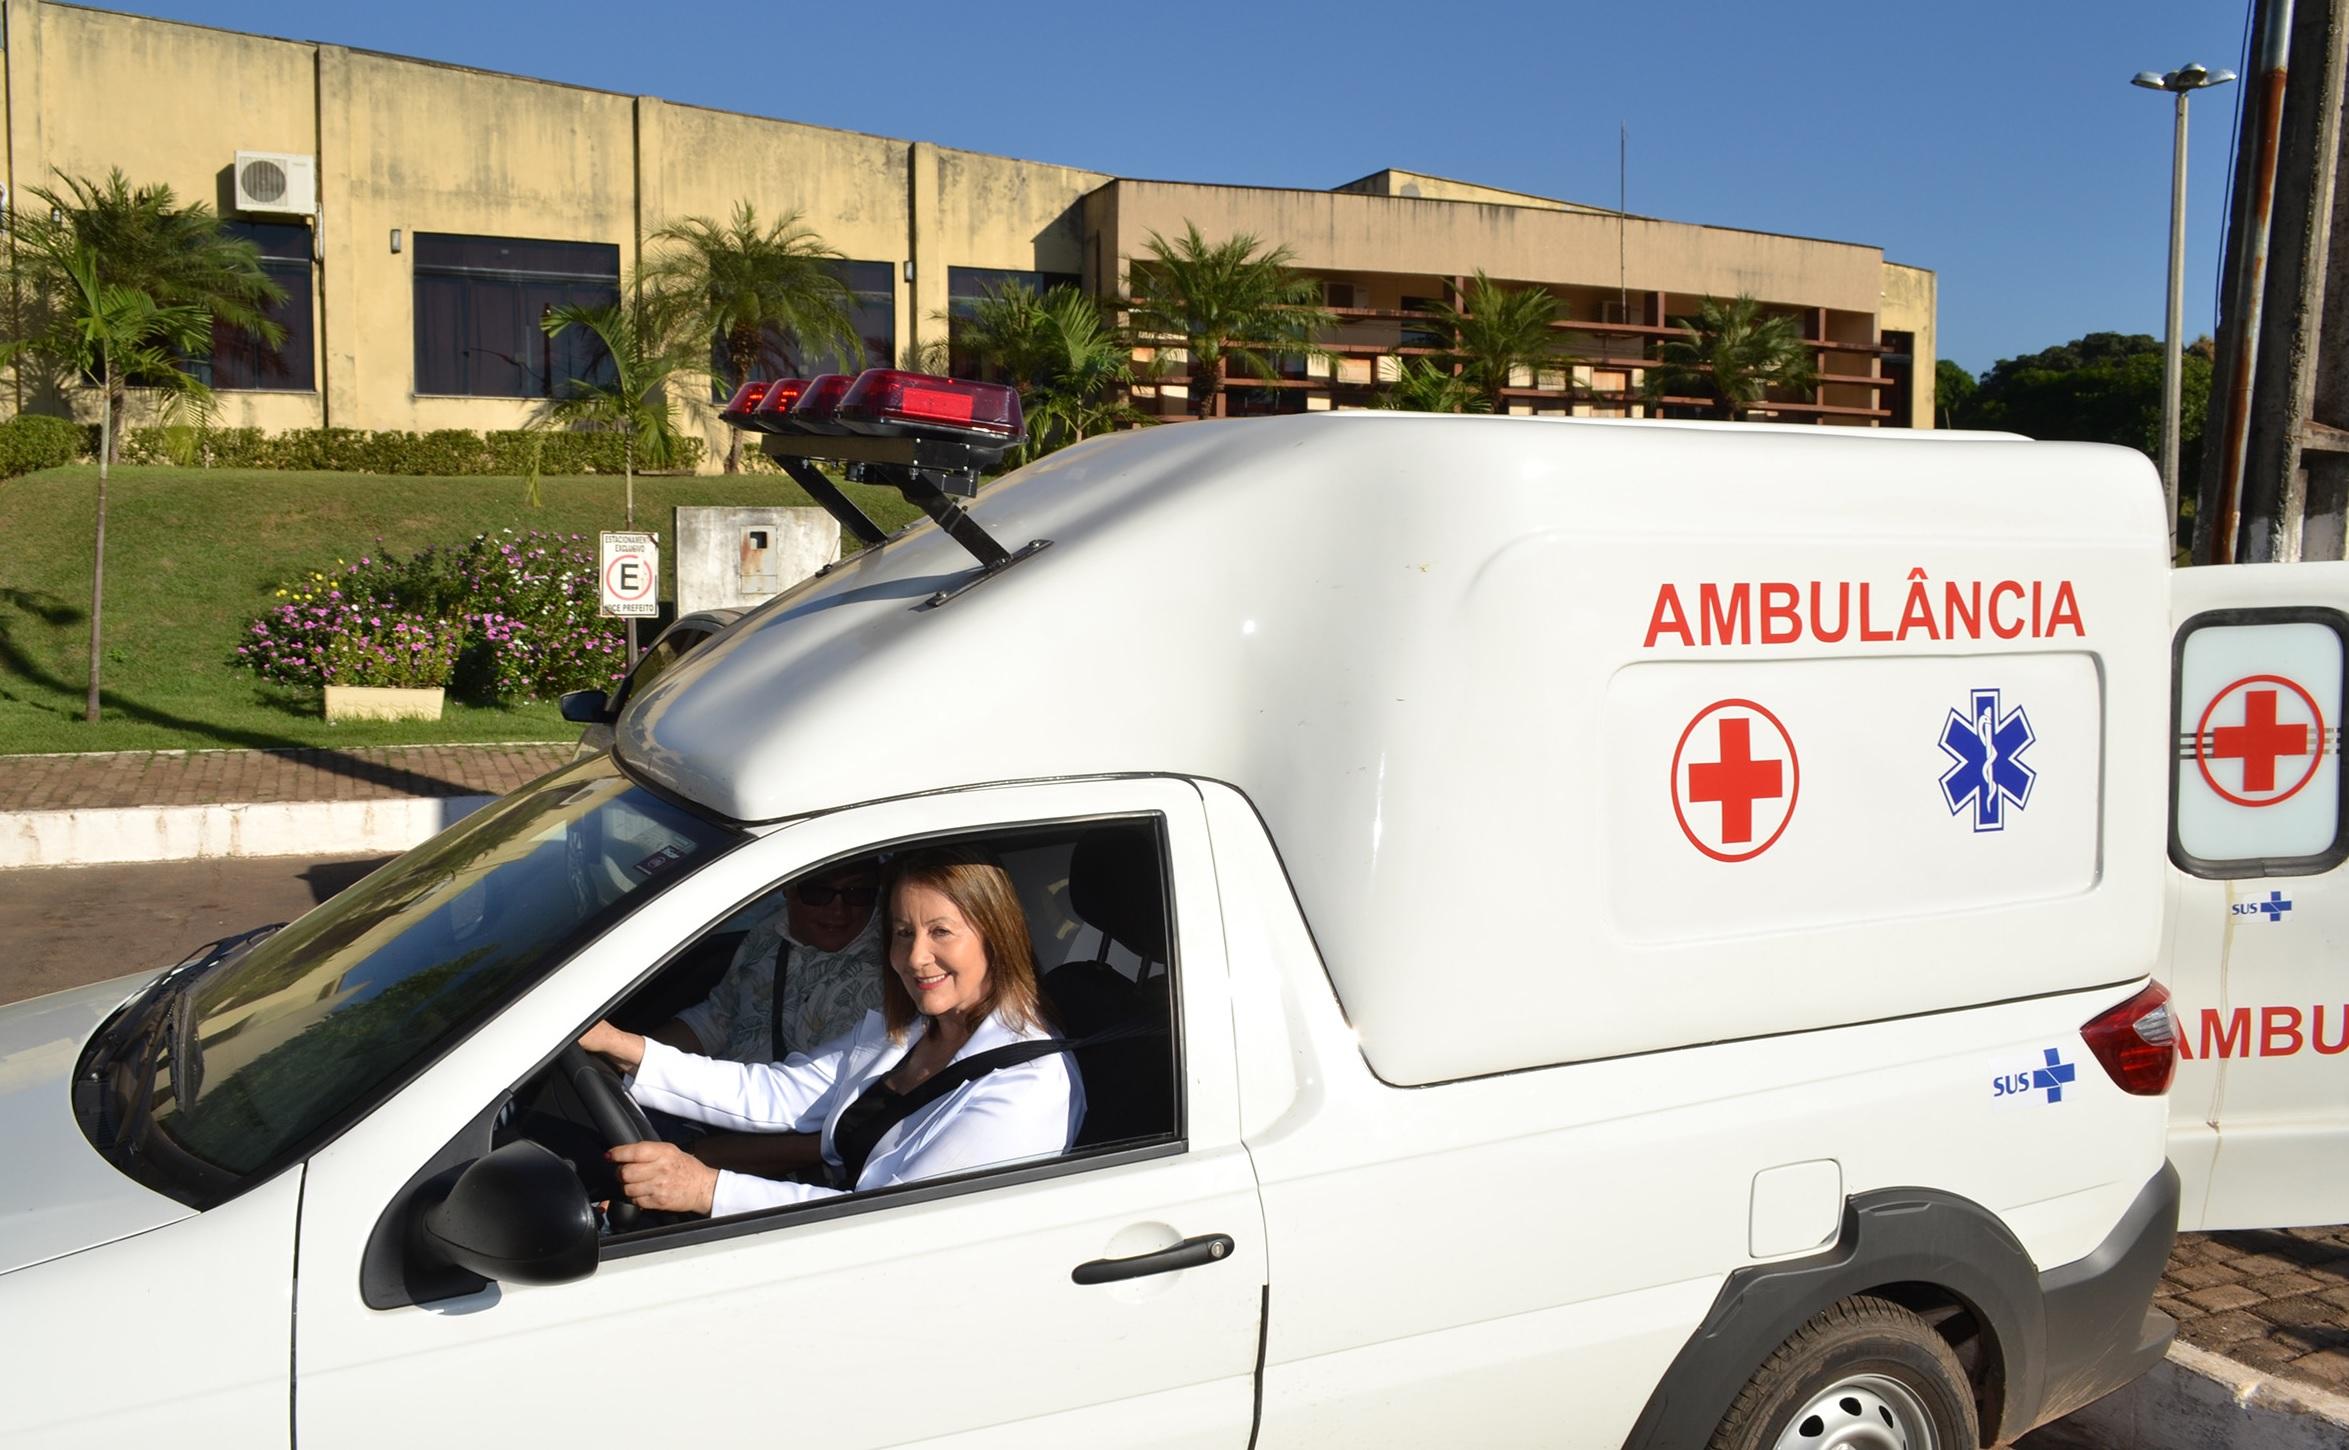 Nova ambulância adquirida em Guaraí vai atender demandas da saúde pública municipal